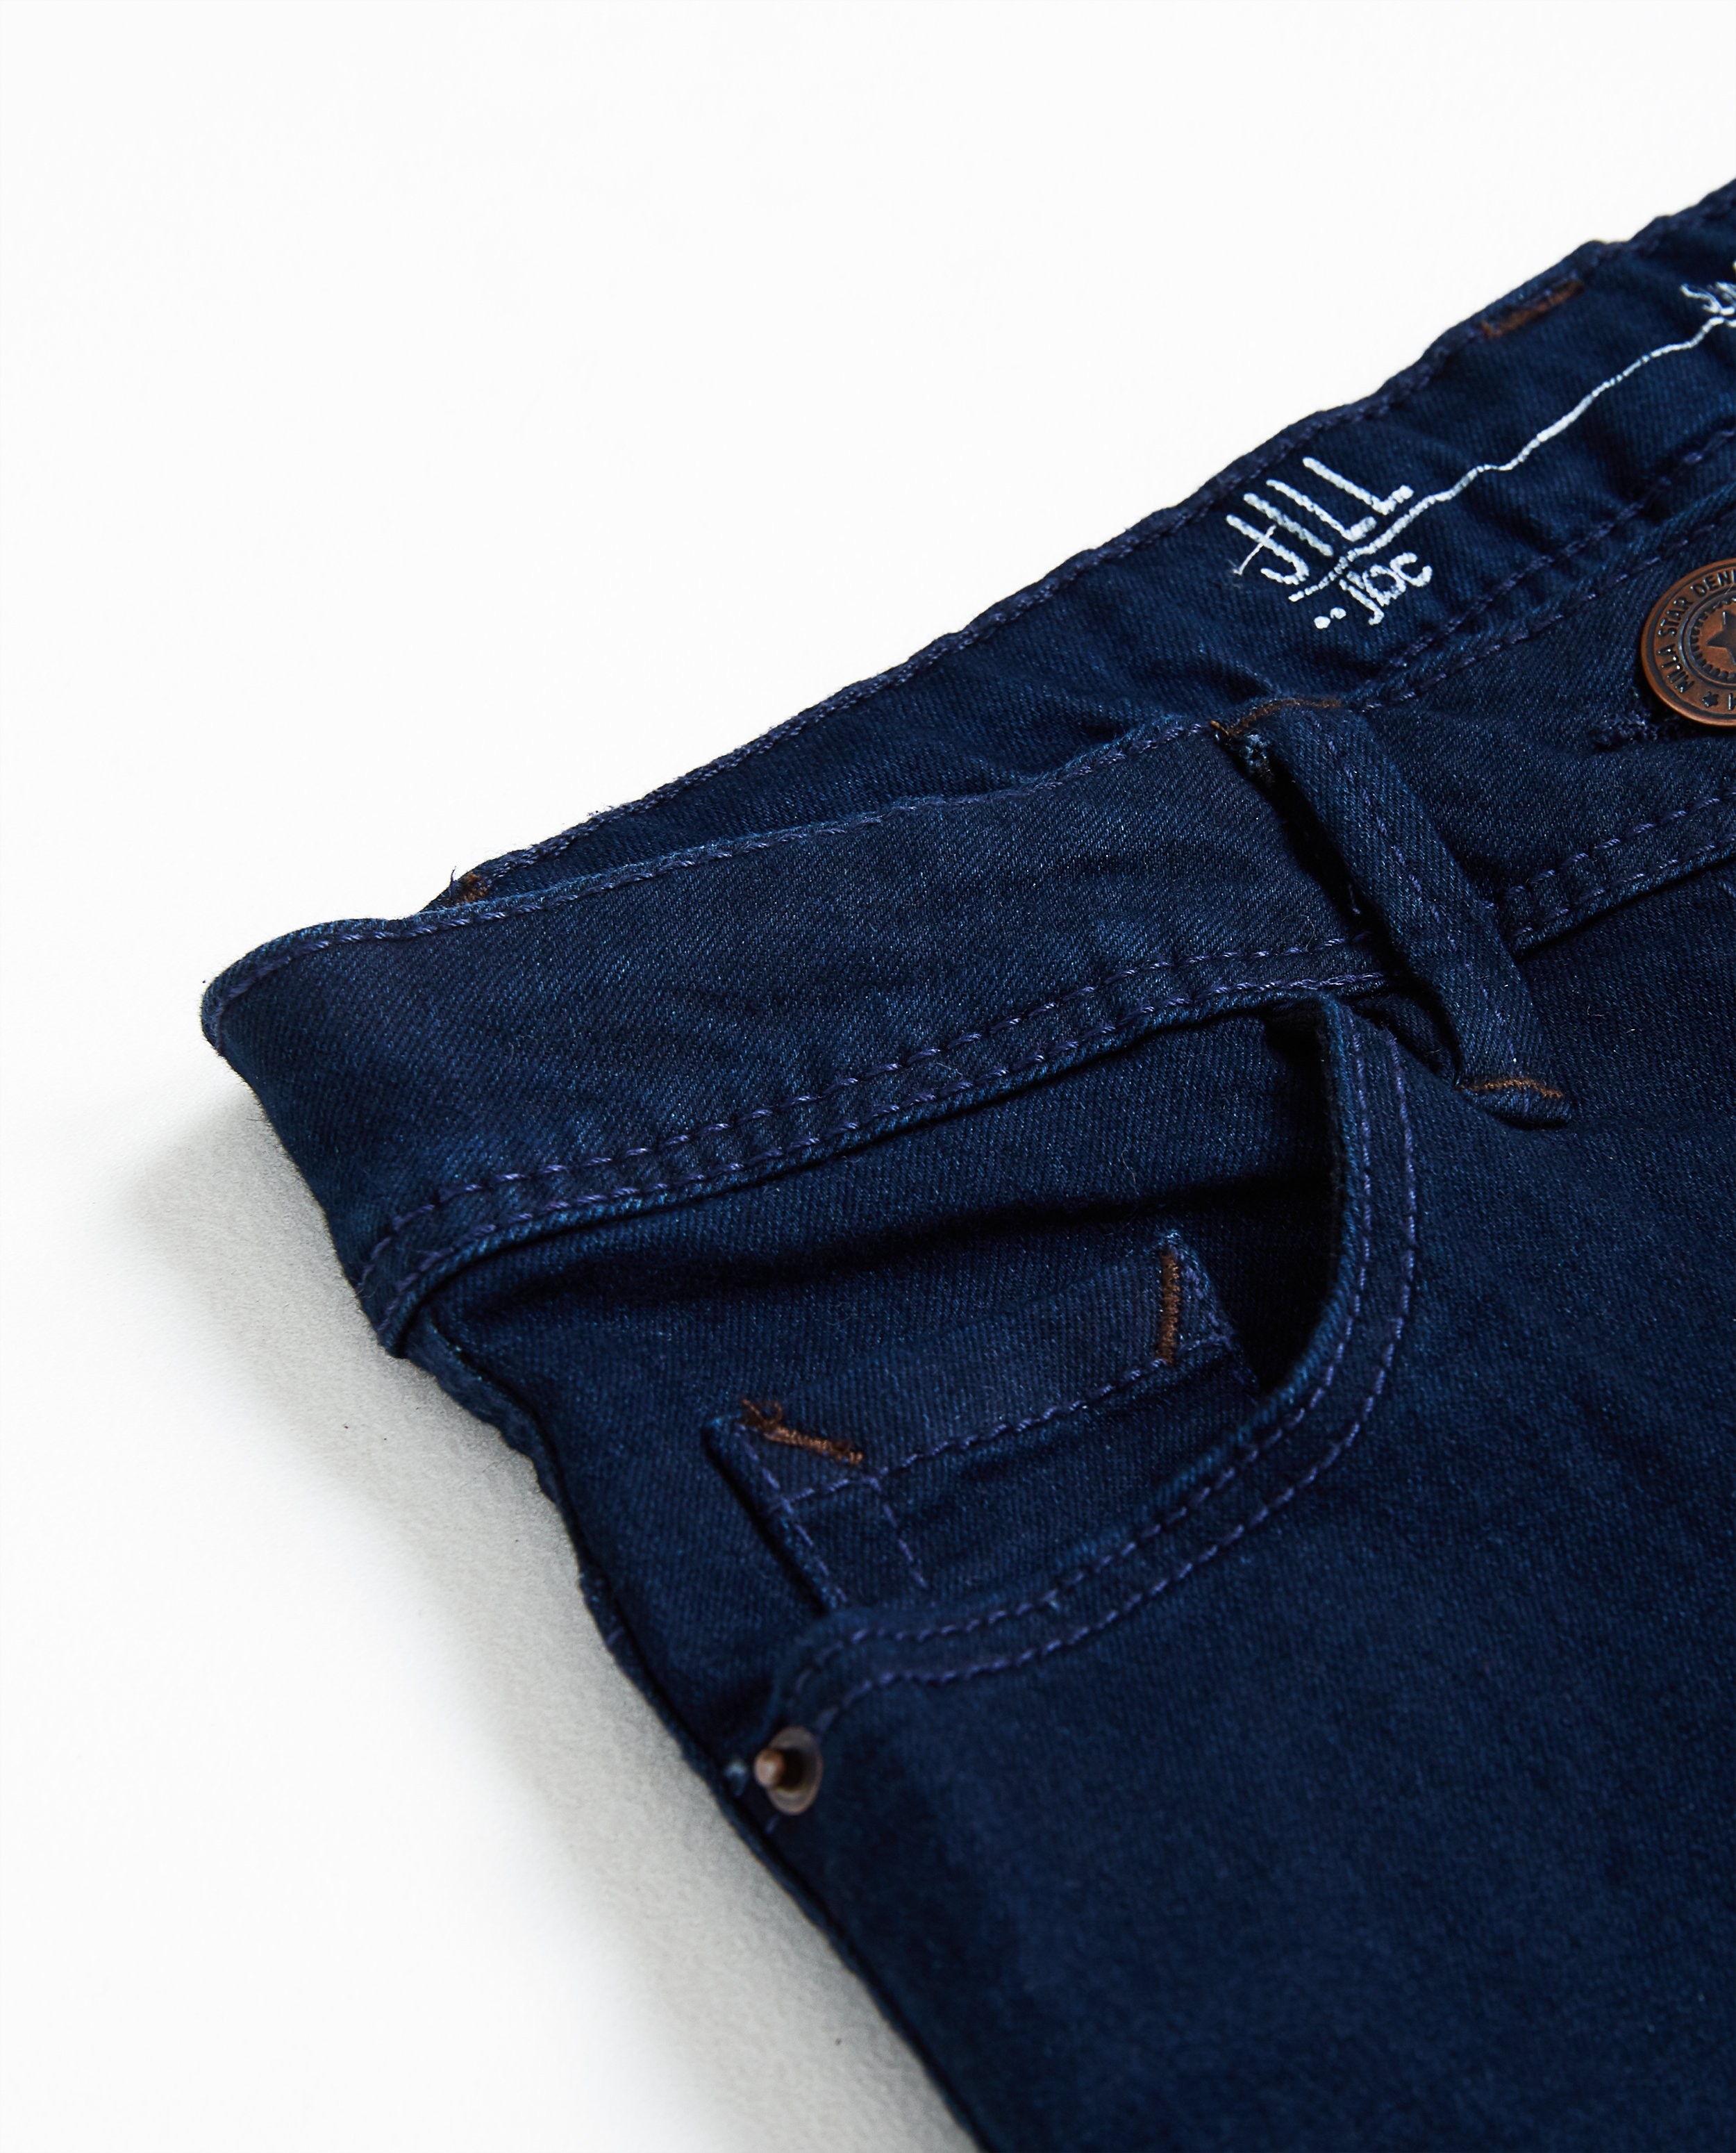 Jeans - Donkerblauwe slim jeans 